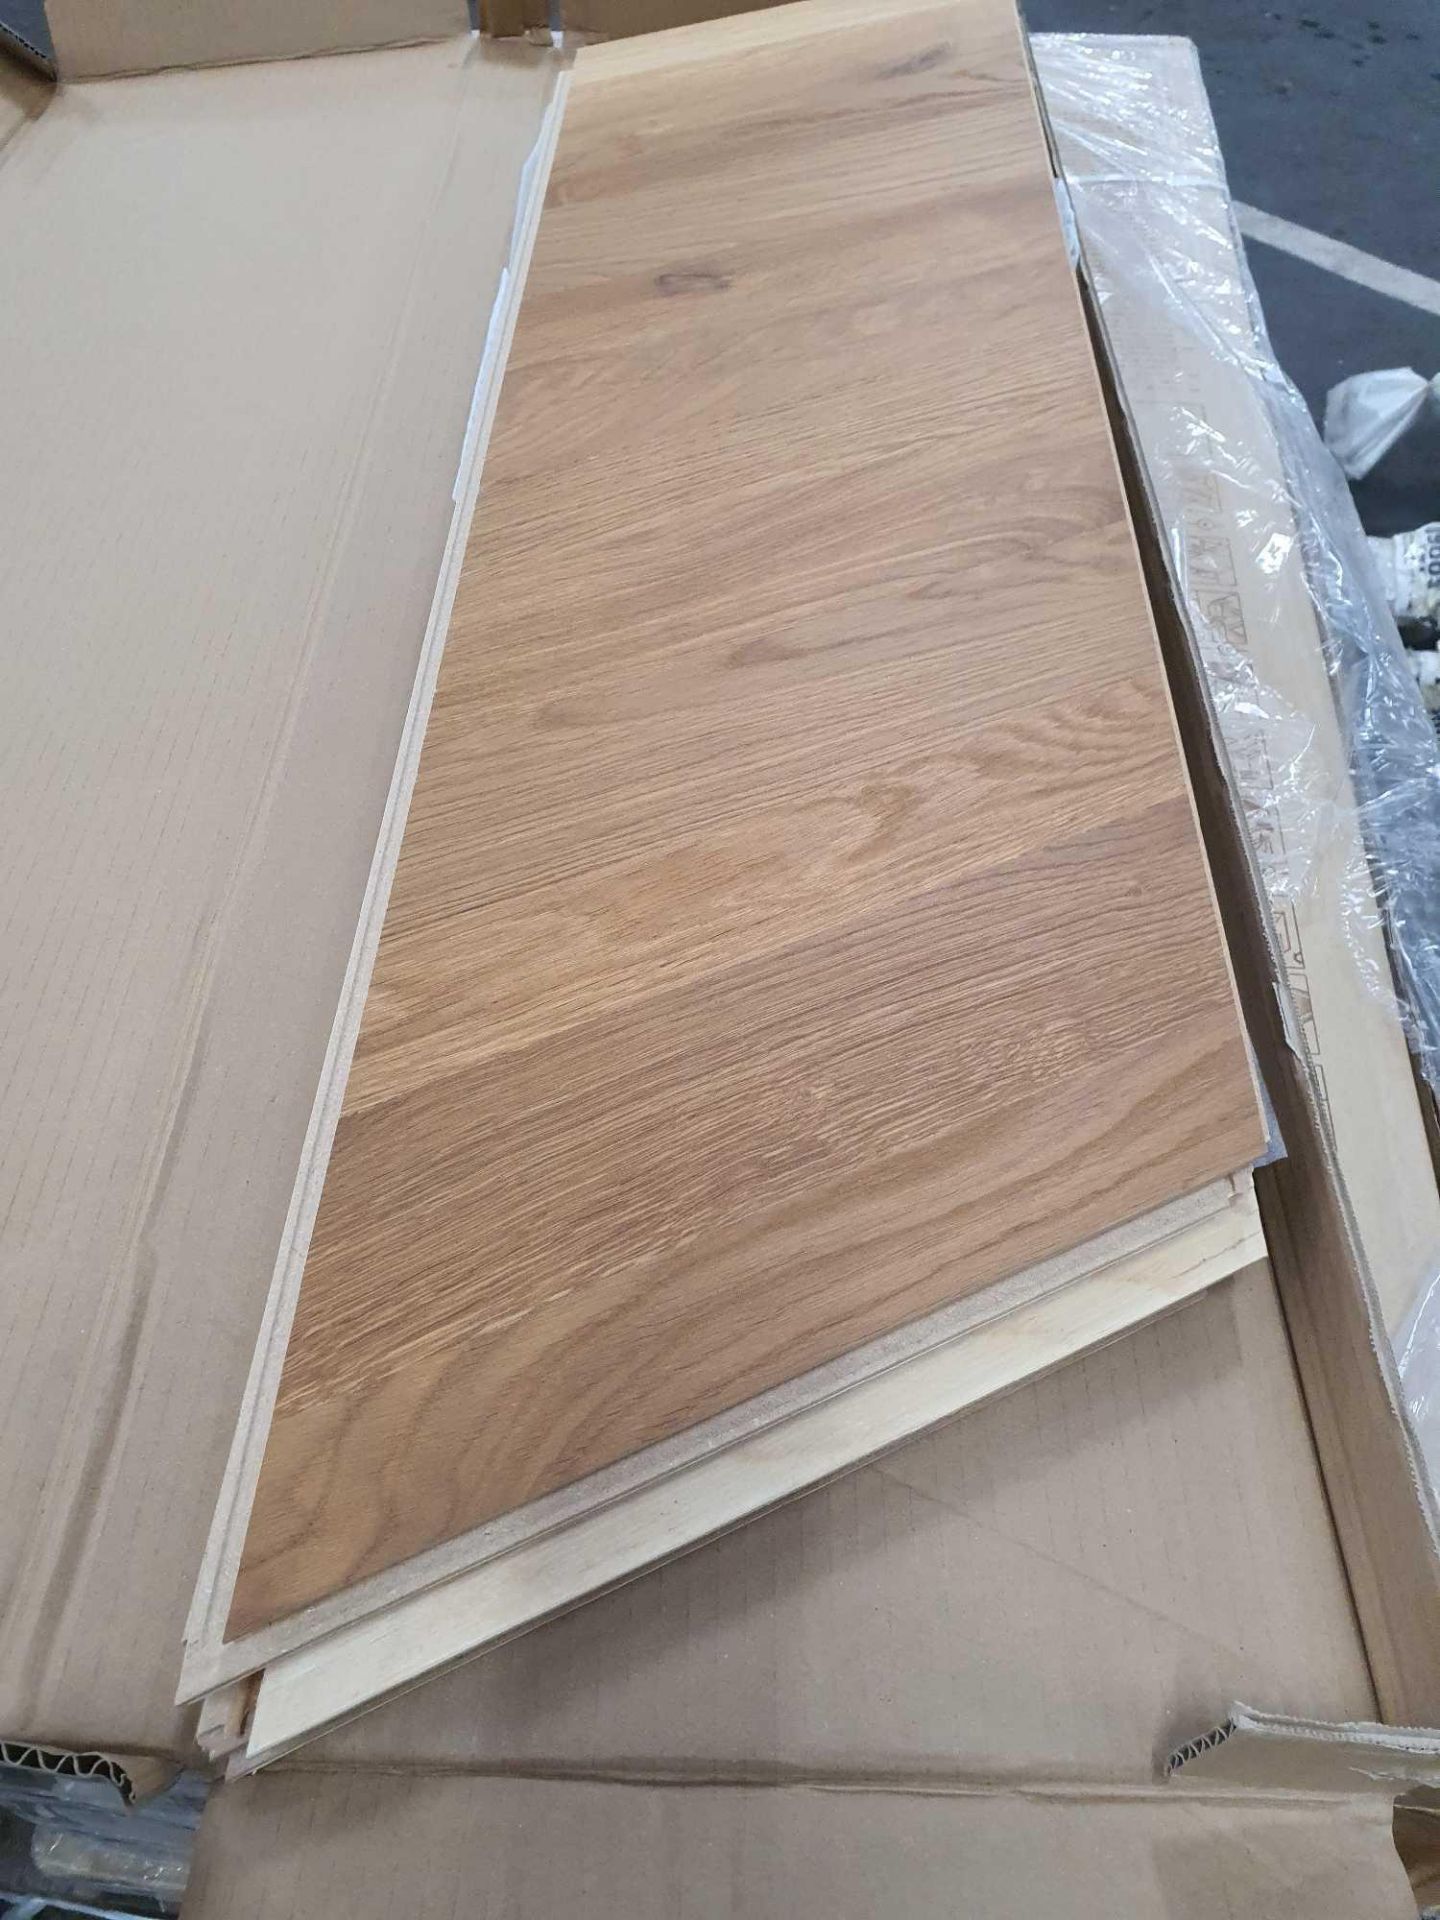 4 Boxes Of Quick Step Parquet Hardwood Flooring 1 Box Civers 1.302m2 - Image 5 of 5